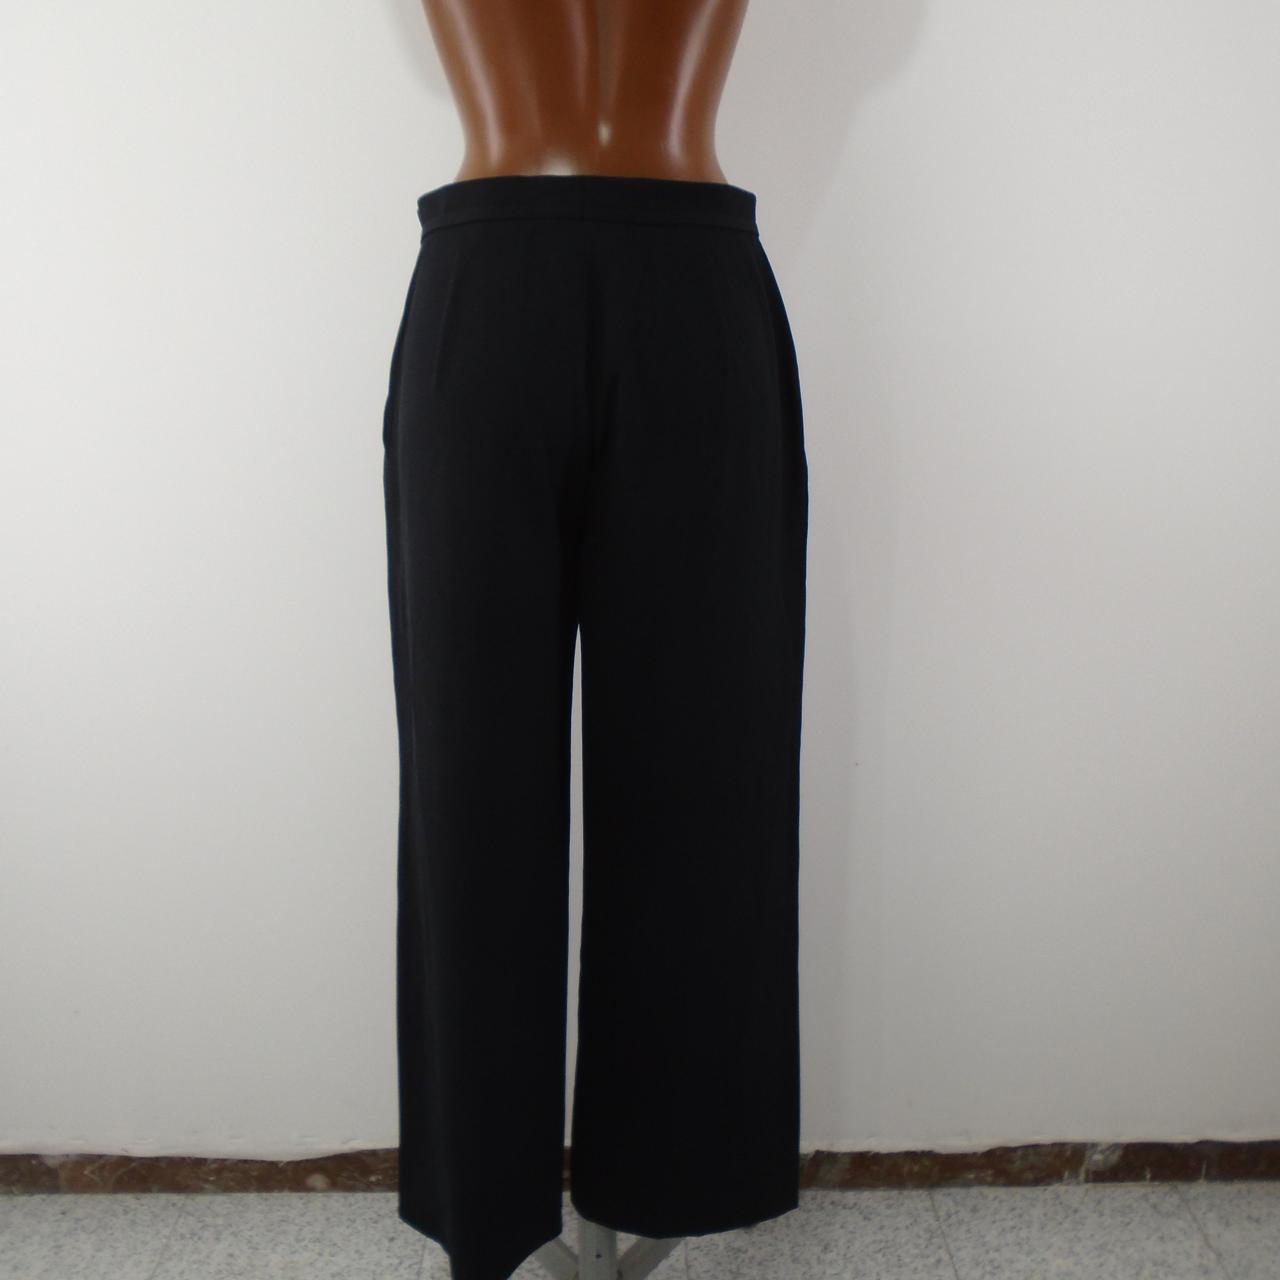 Pantalones de mujer Max Mara. Negro. L. Usado. Muy bien